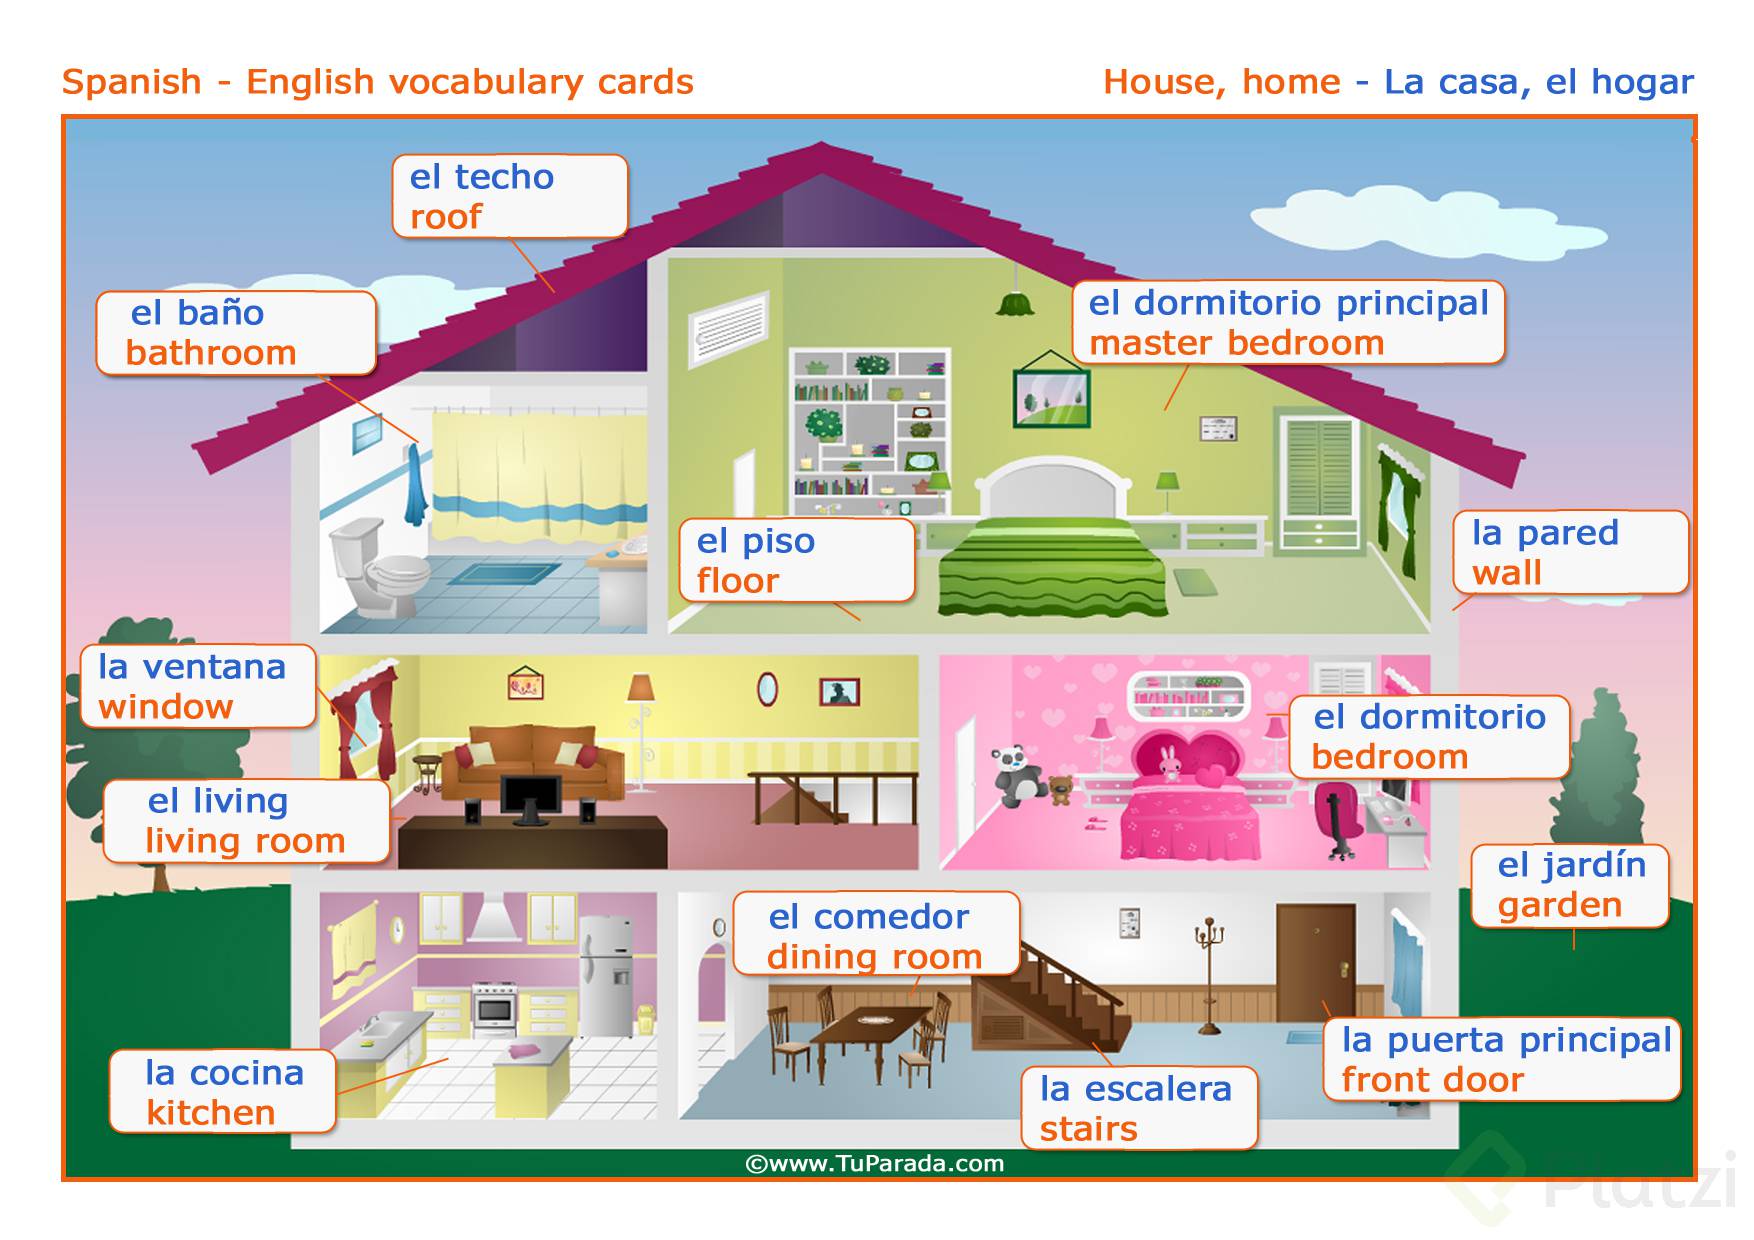 This is the house i live. Комната мебель испанский язык. Комнаты в доме на испанском языке. Домик с комнатами по английскому языку. Название комнат на английском.